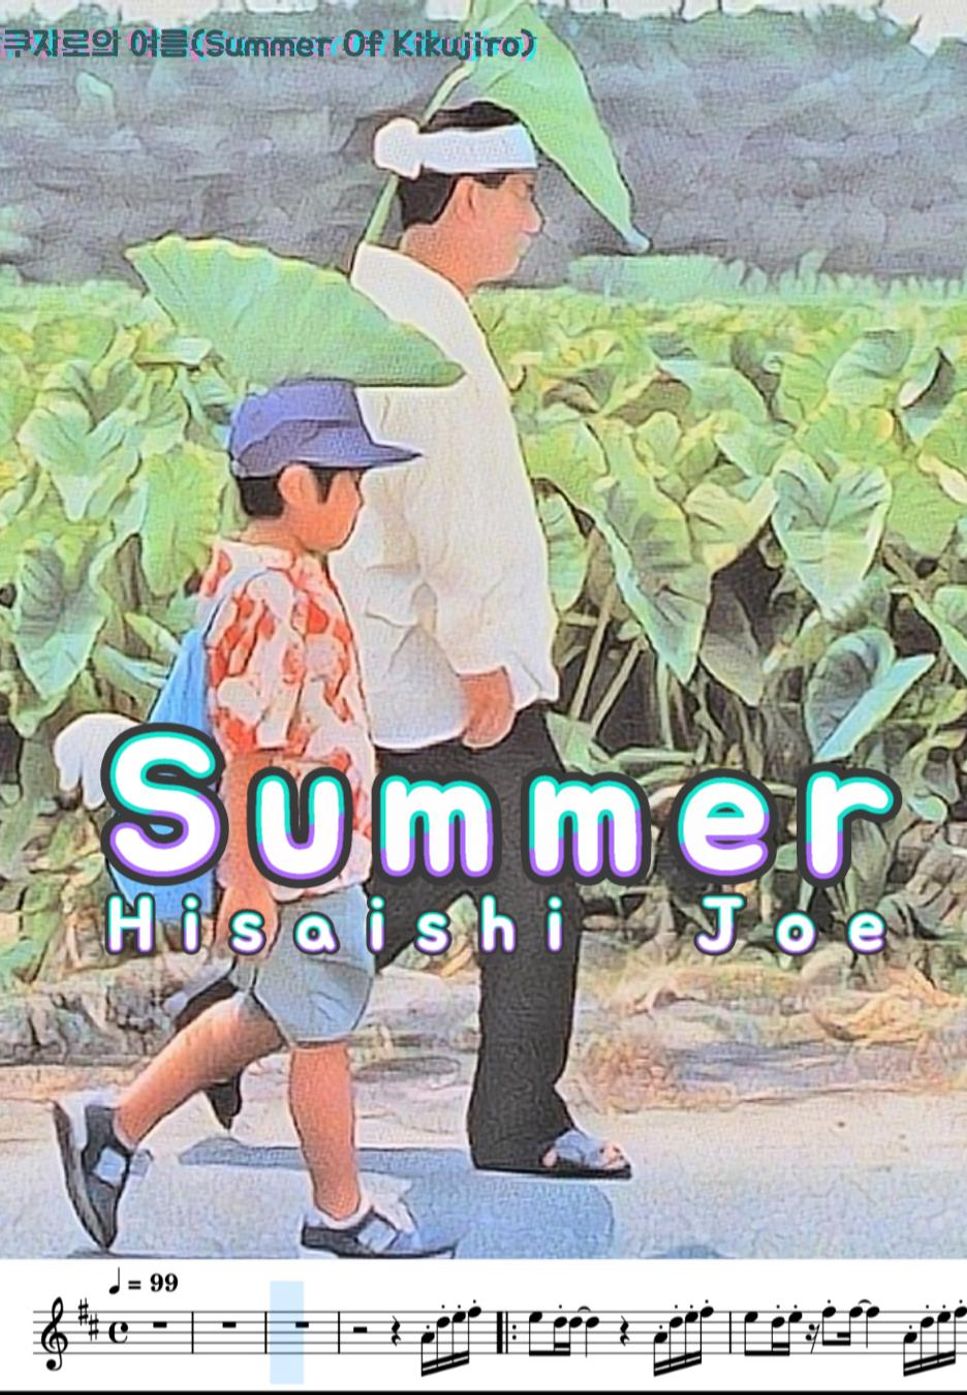 Hisaishi Joe - Summer(Summer Of Kikujiro) (Flute Duet (플루트 듀엣)) by HealingFlute